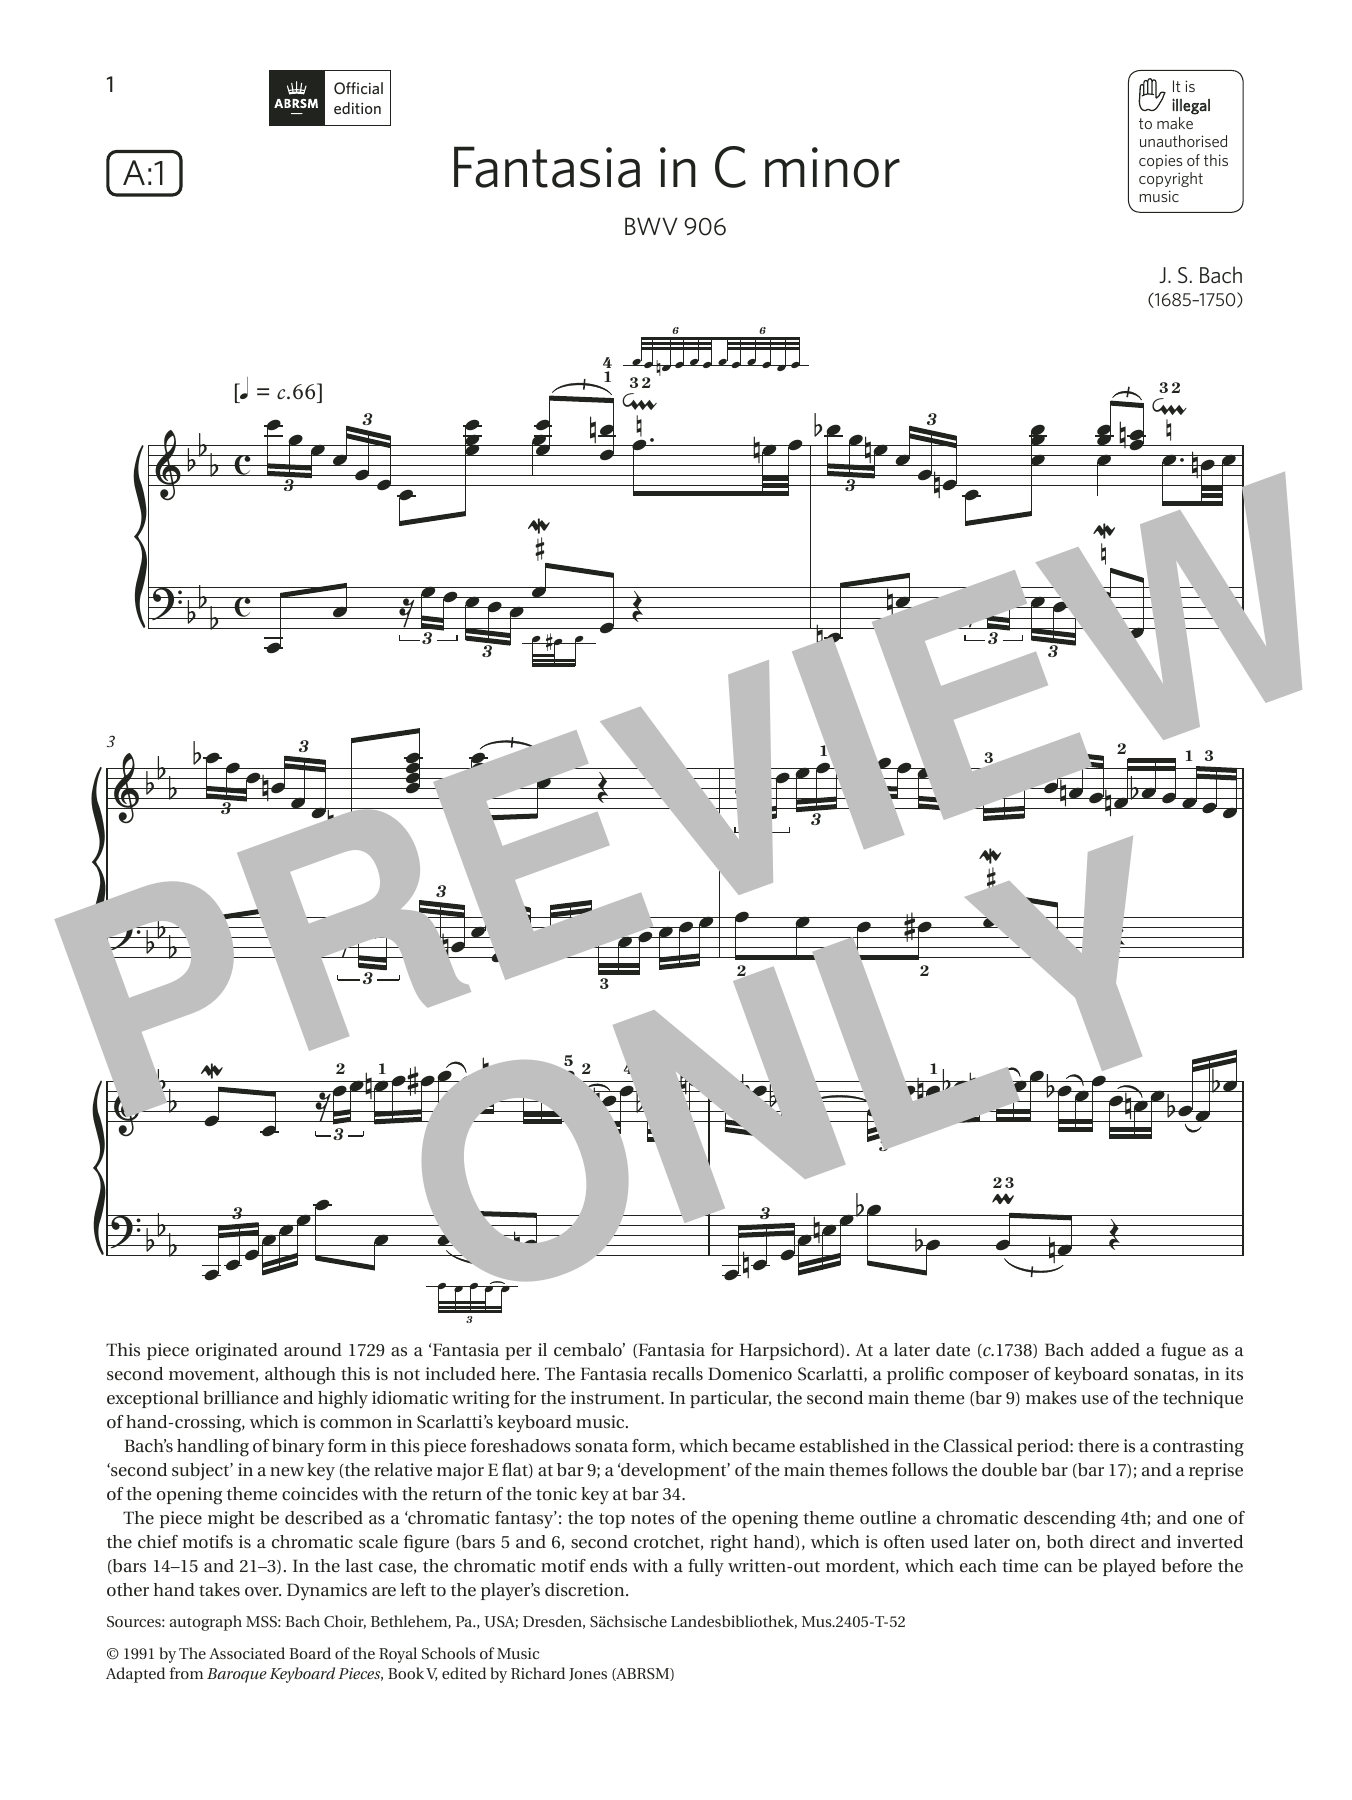 Download J. S. Bach Fantasia in C minor (Grade 8, list A1, Sheet Music